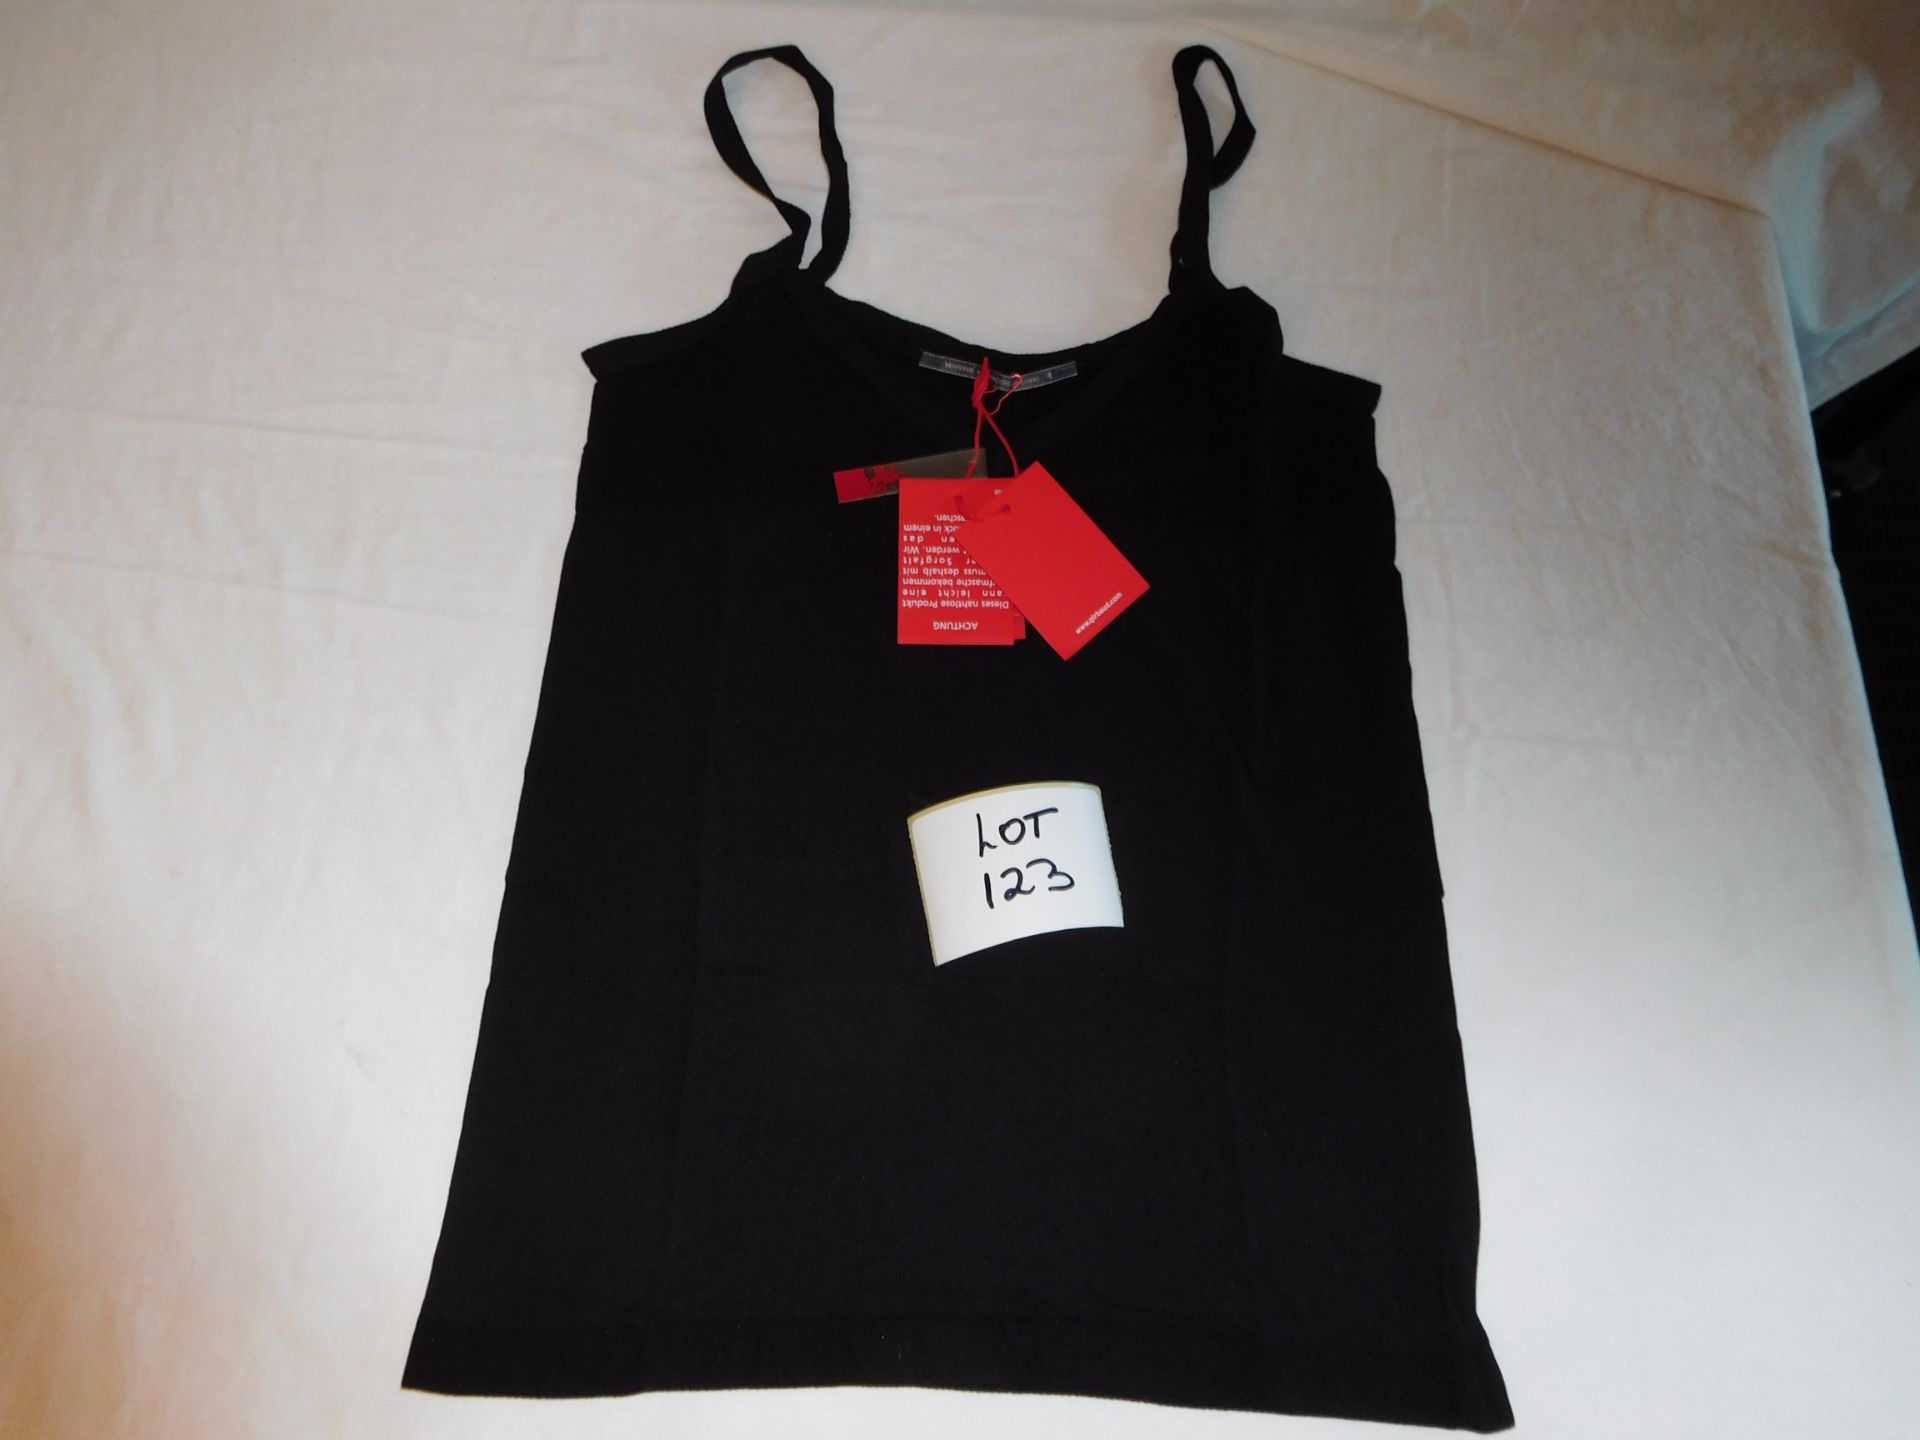 armourisole stretch top colour black size T:-3- retail price £60